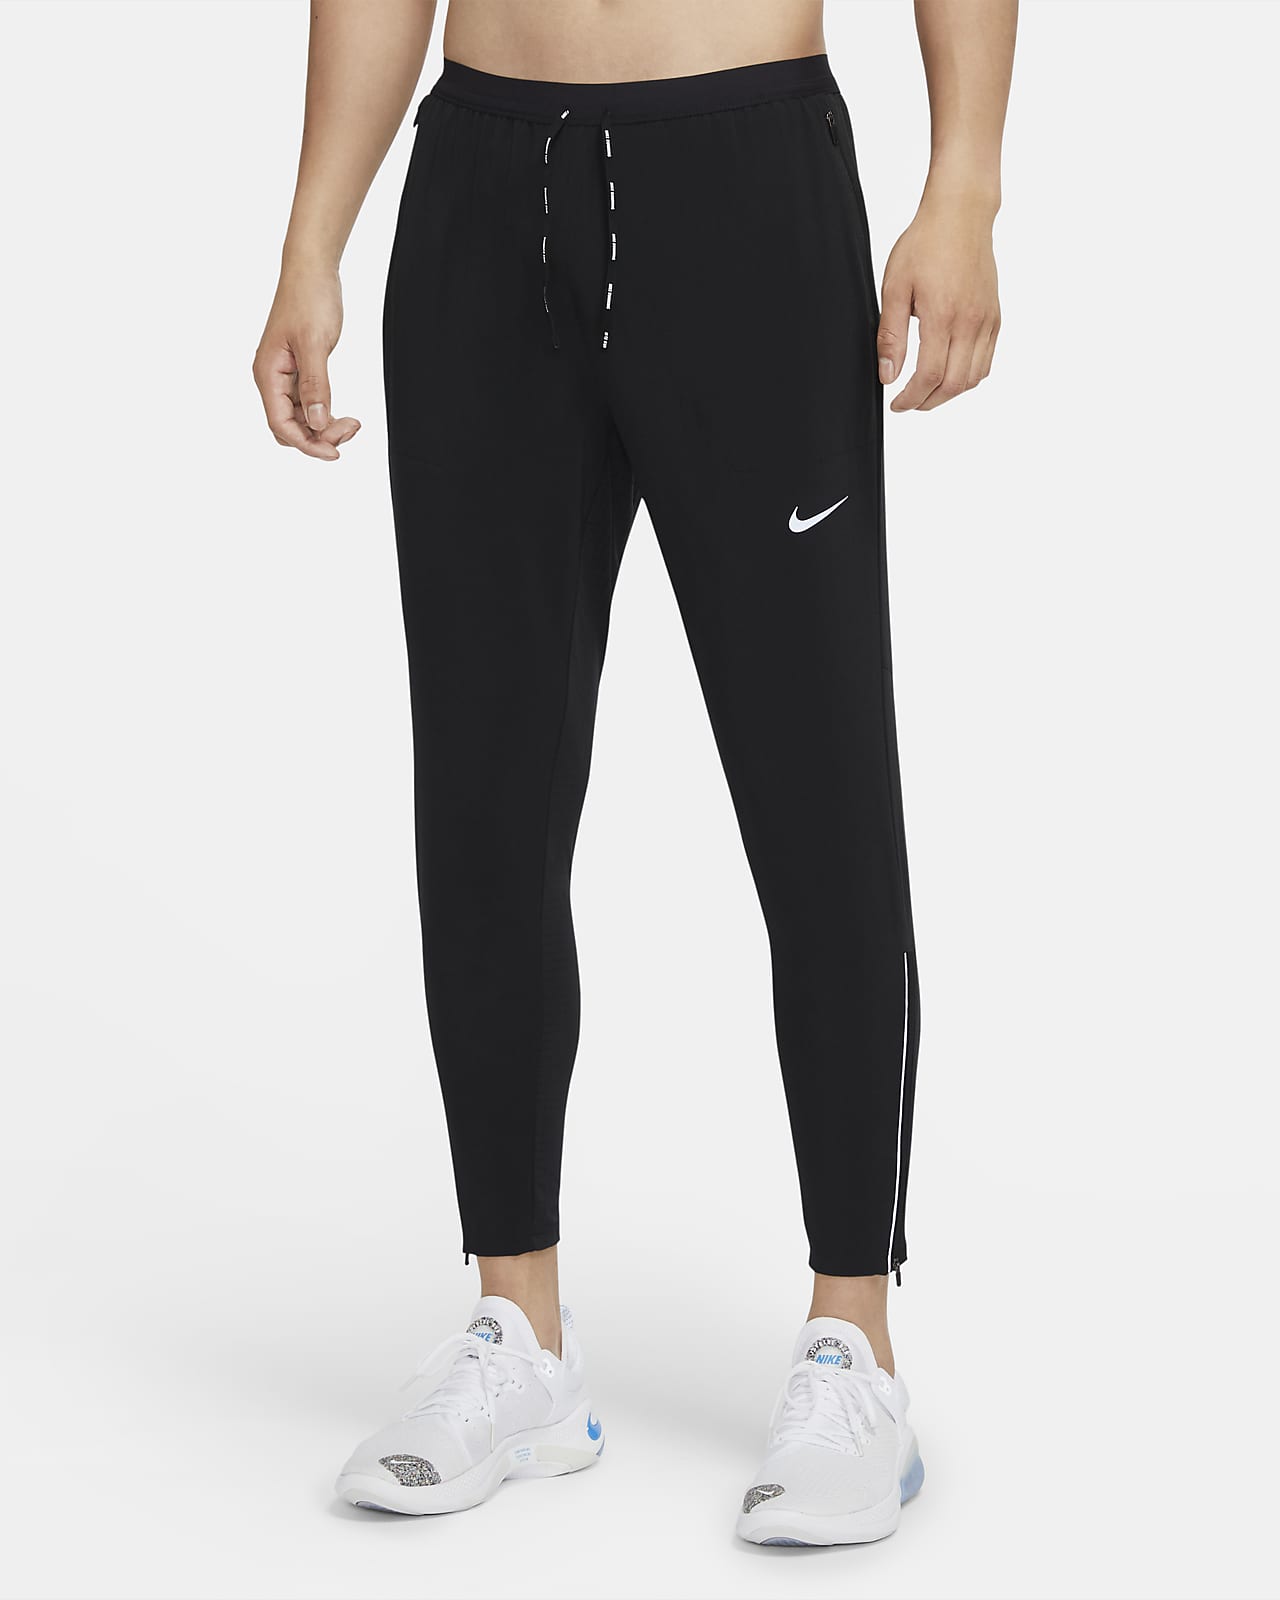 Nike Phenom Elite Pantalons de running de teixit Woven - Home